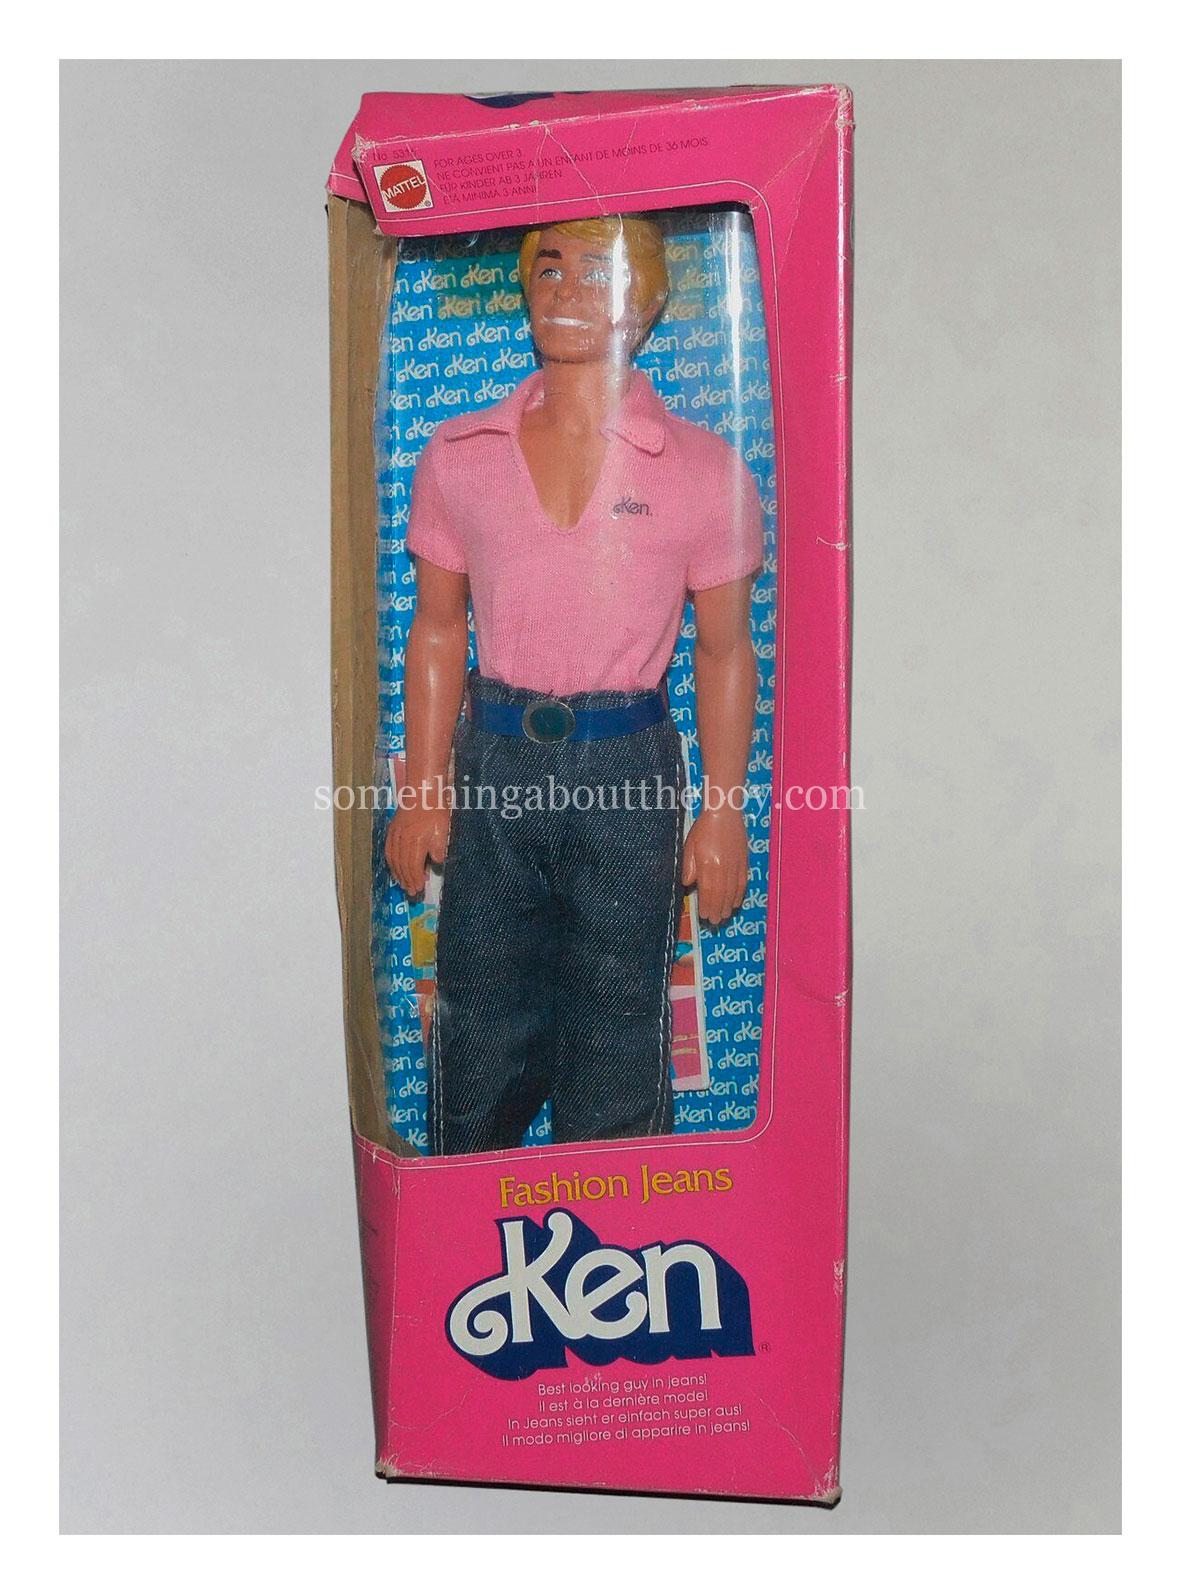 1982 #5316 Fashion Jeans Ken in European packaging (Hong Kong)